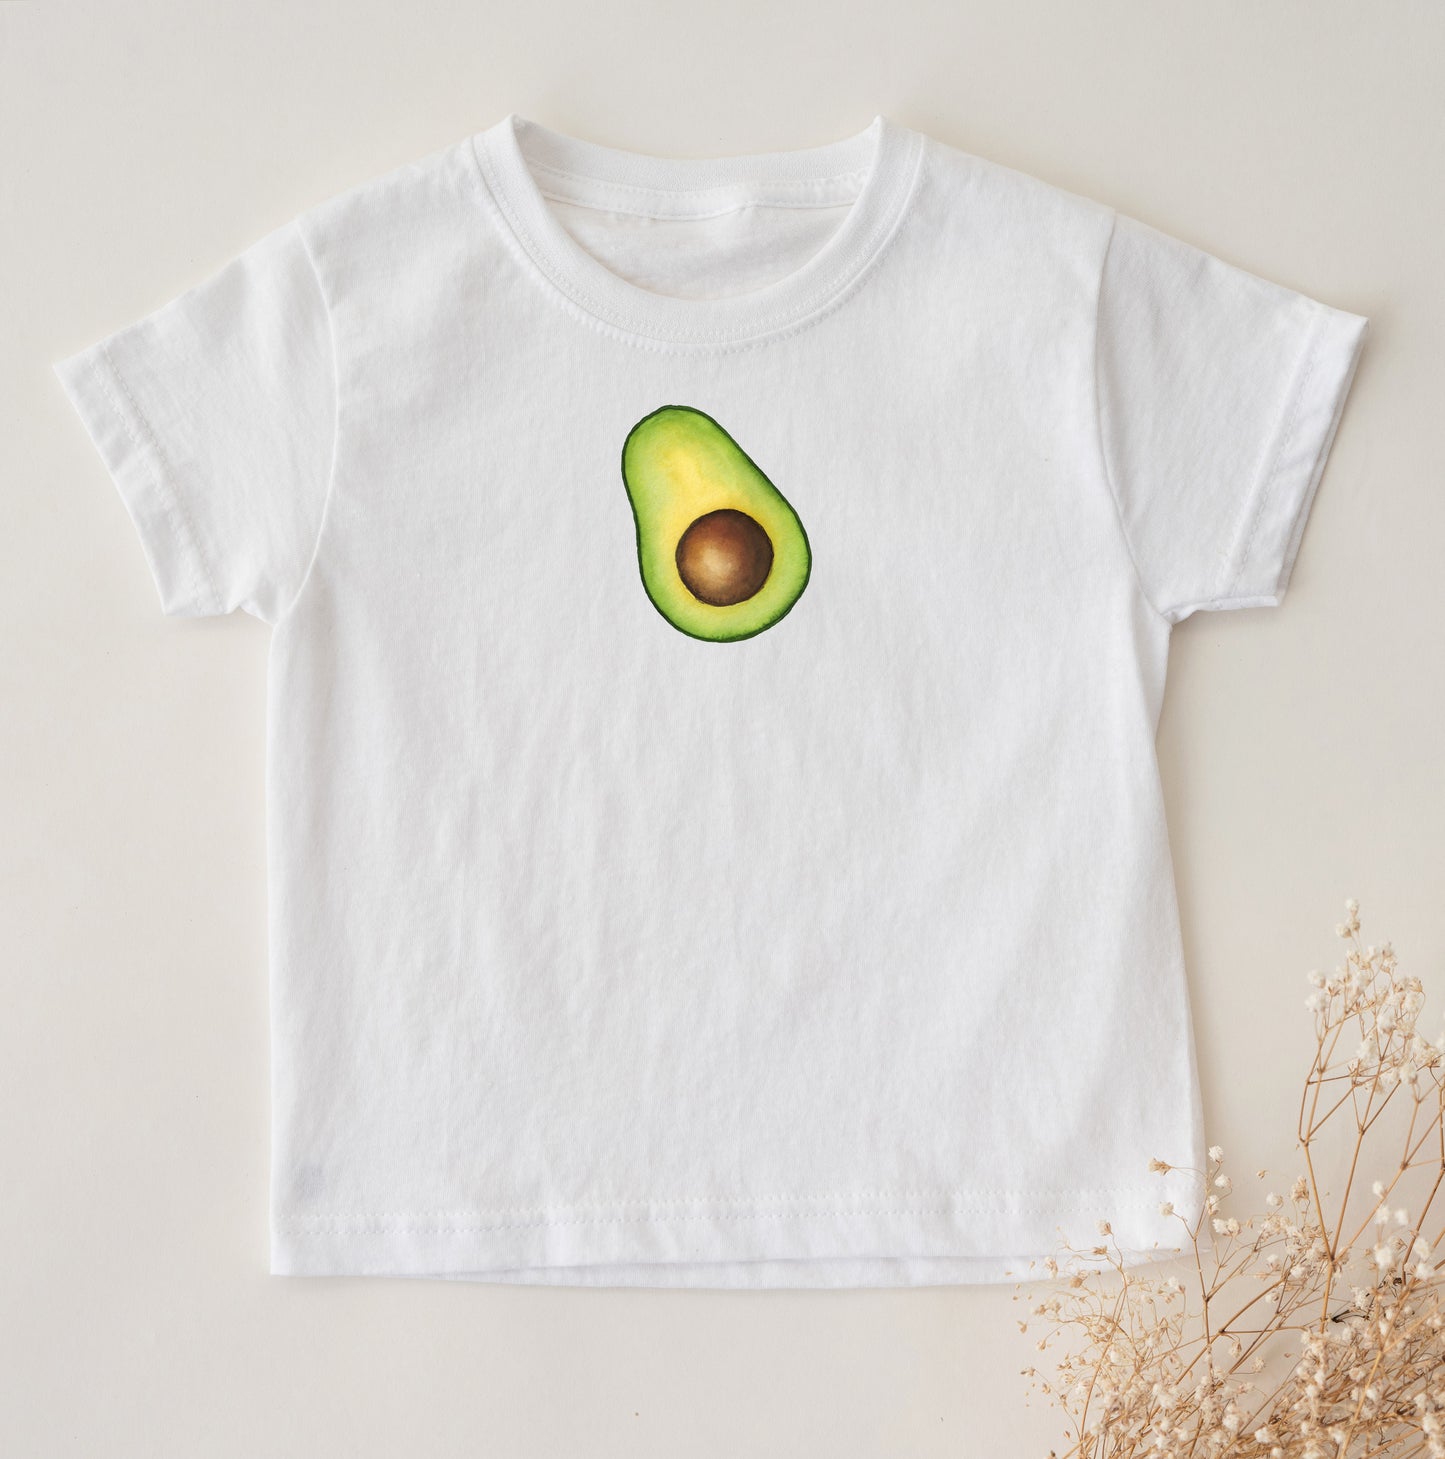 Avocado Toddler Kids T-Shirt, Sizes 2T-5/6T, White